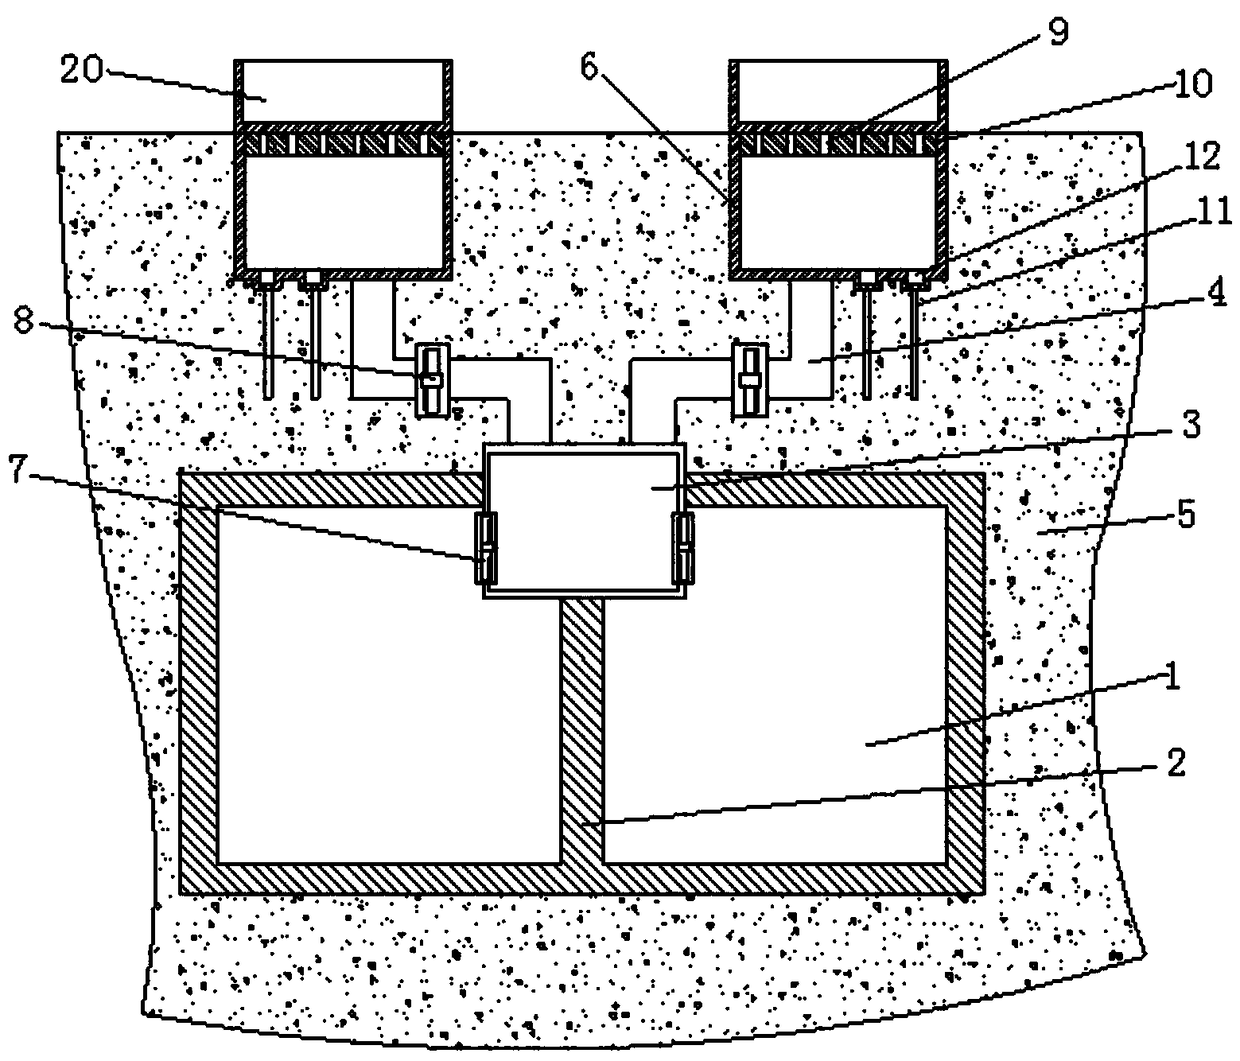 A tunnel ventilation system